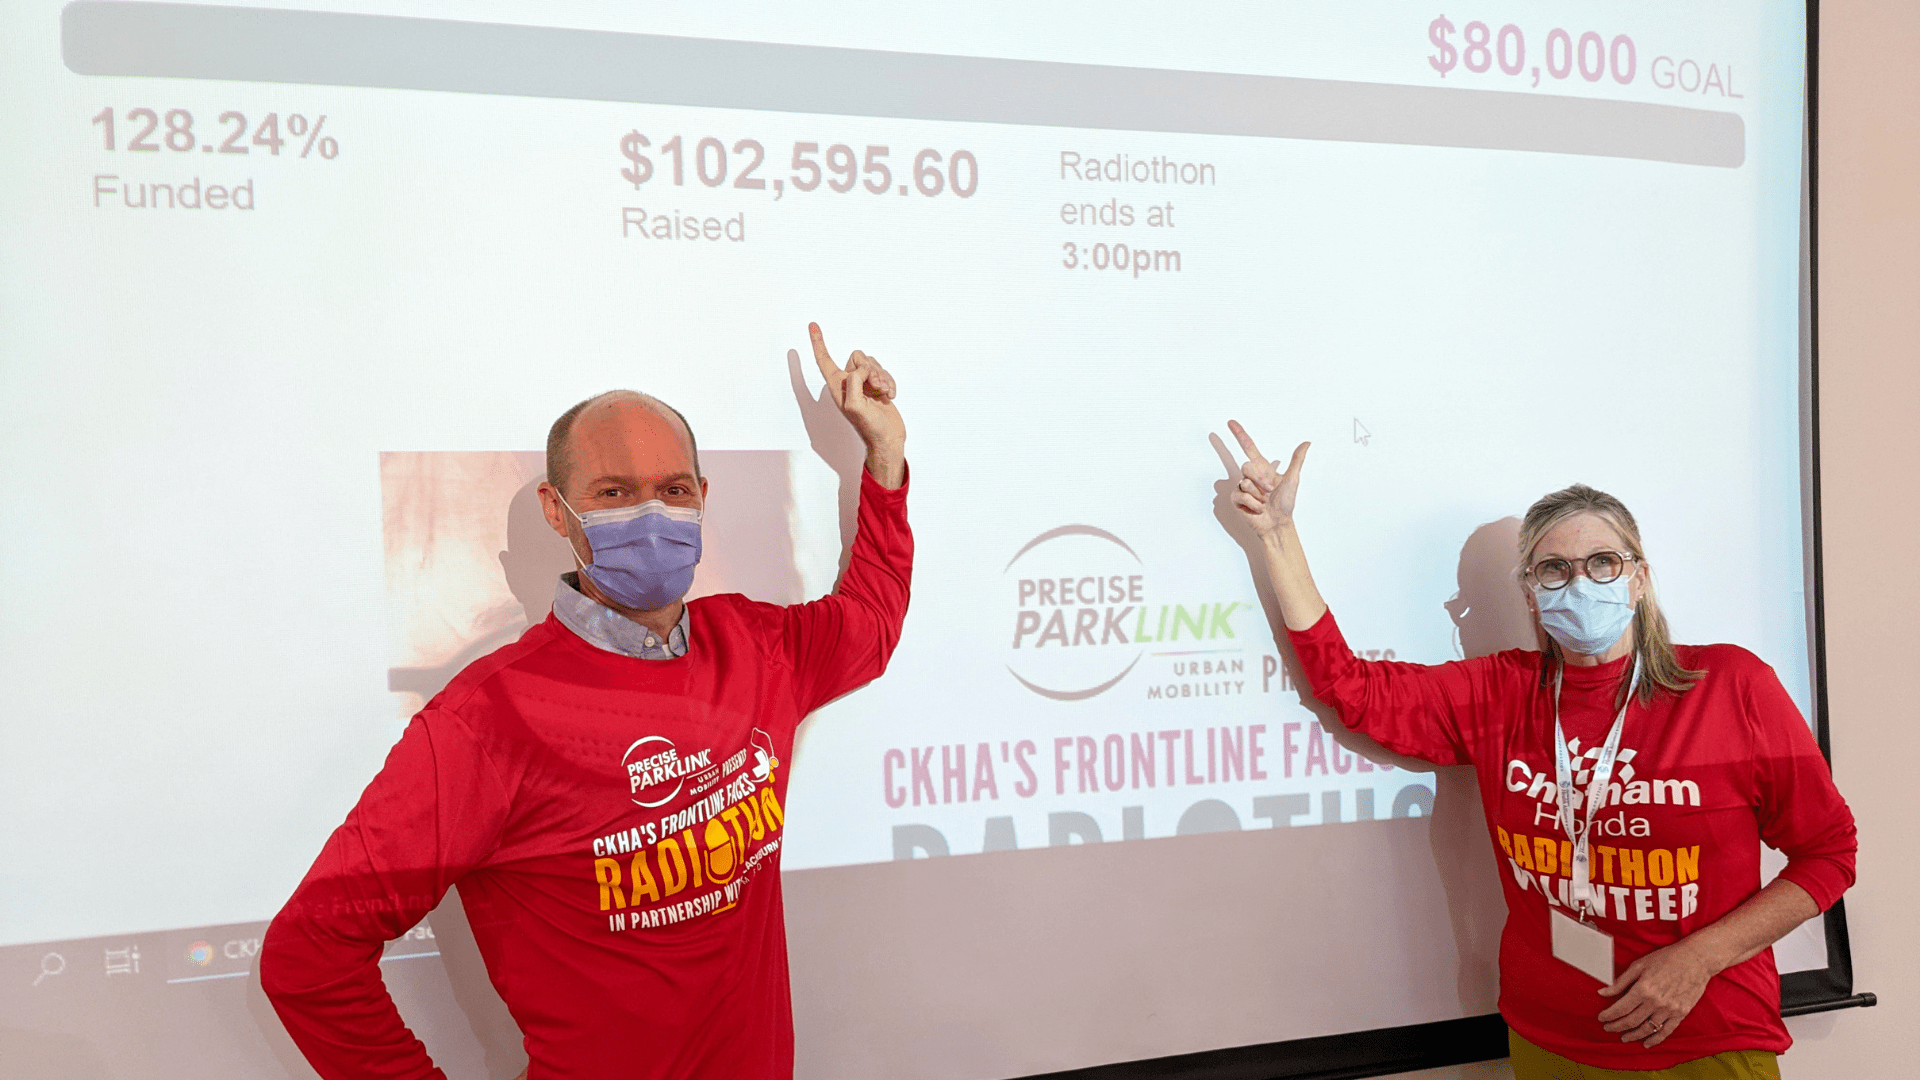 Foundation’s Radiothon raises $102,595 in honour of CKHA’s Frontline Faces